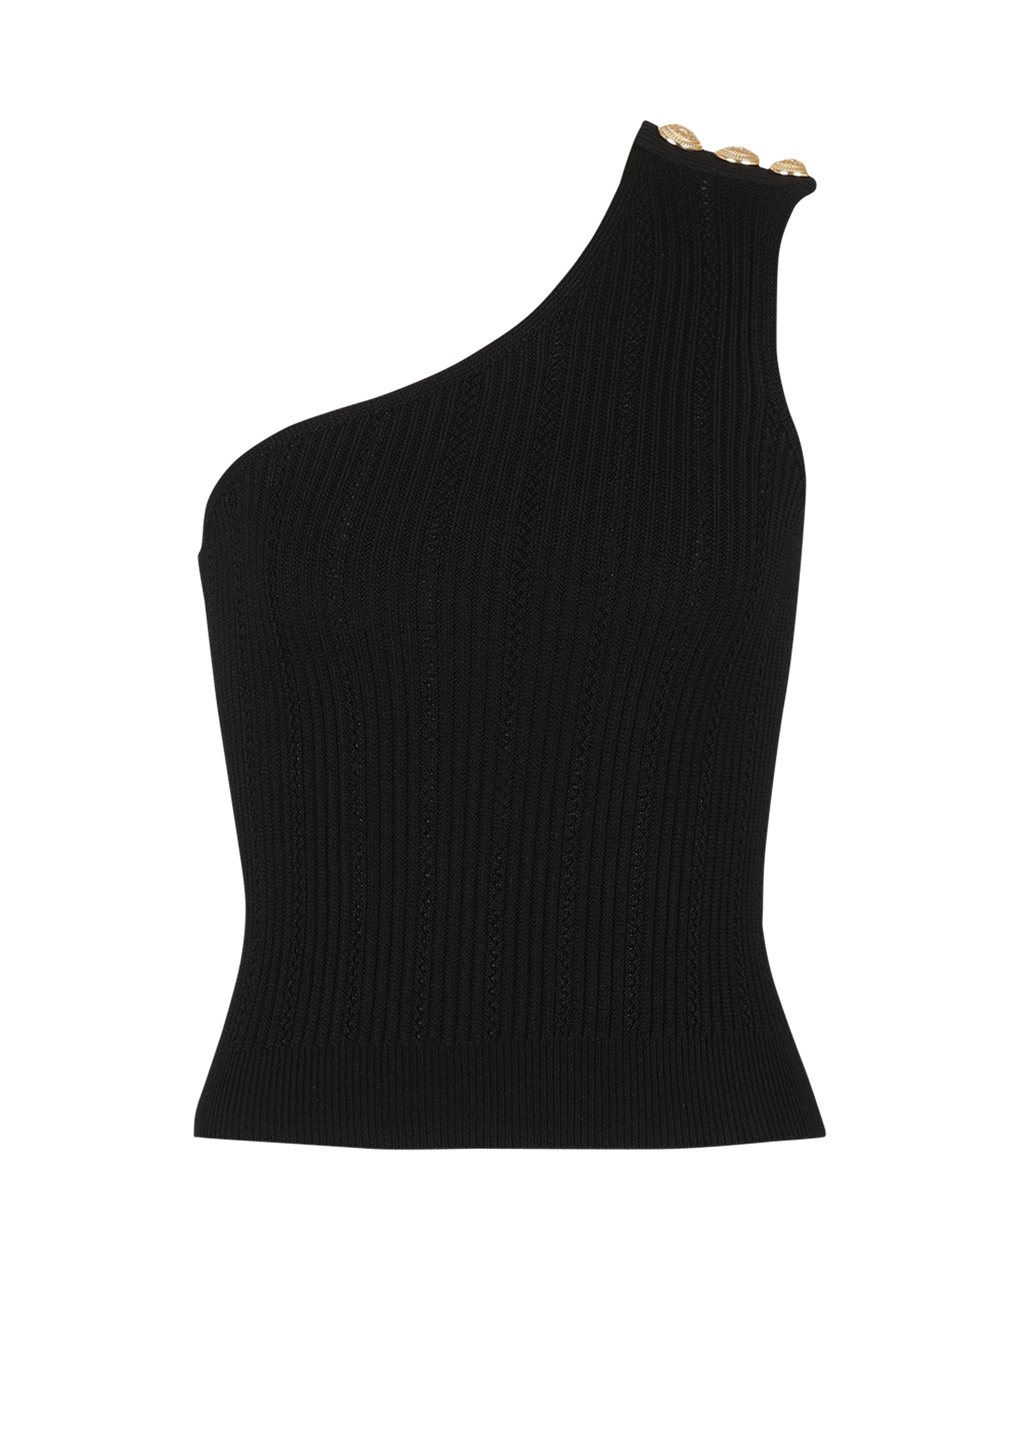 Asymmetrical eco-designed knit crop top, black, hi-res